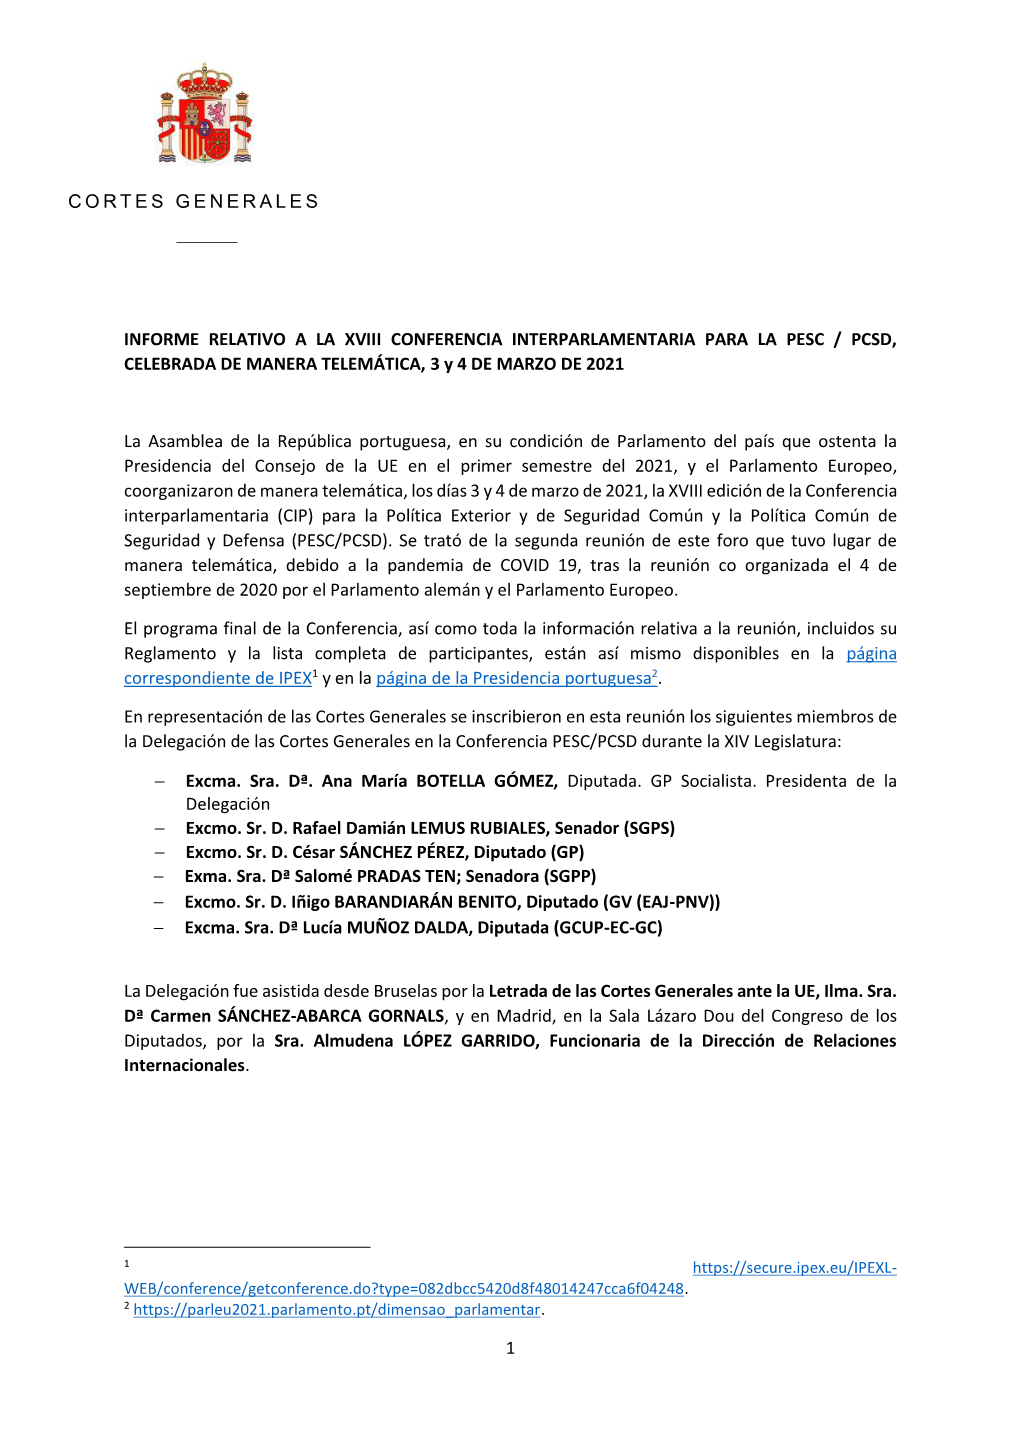 Cortes Generales 1 Informe Relativo a La Xviii